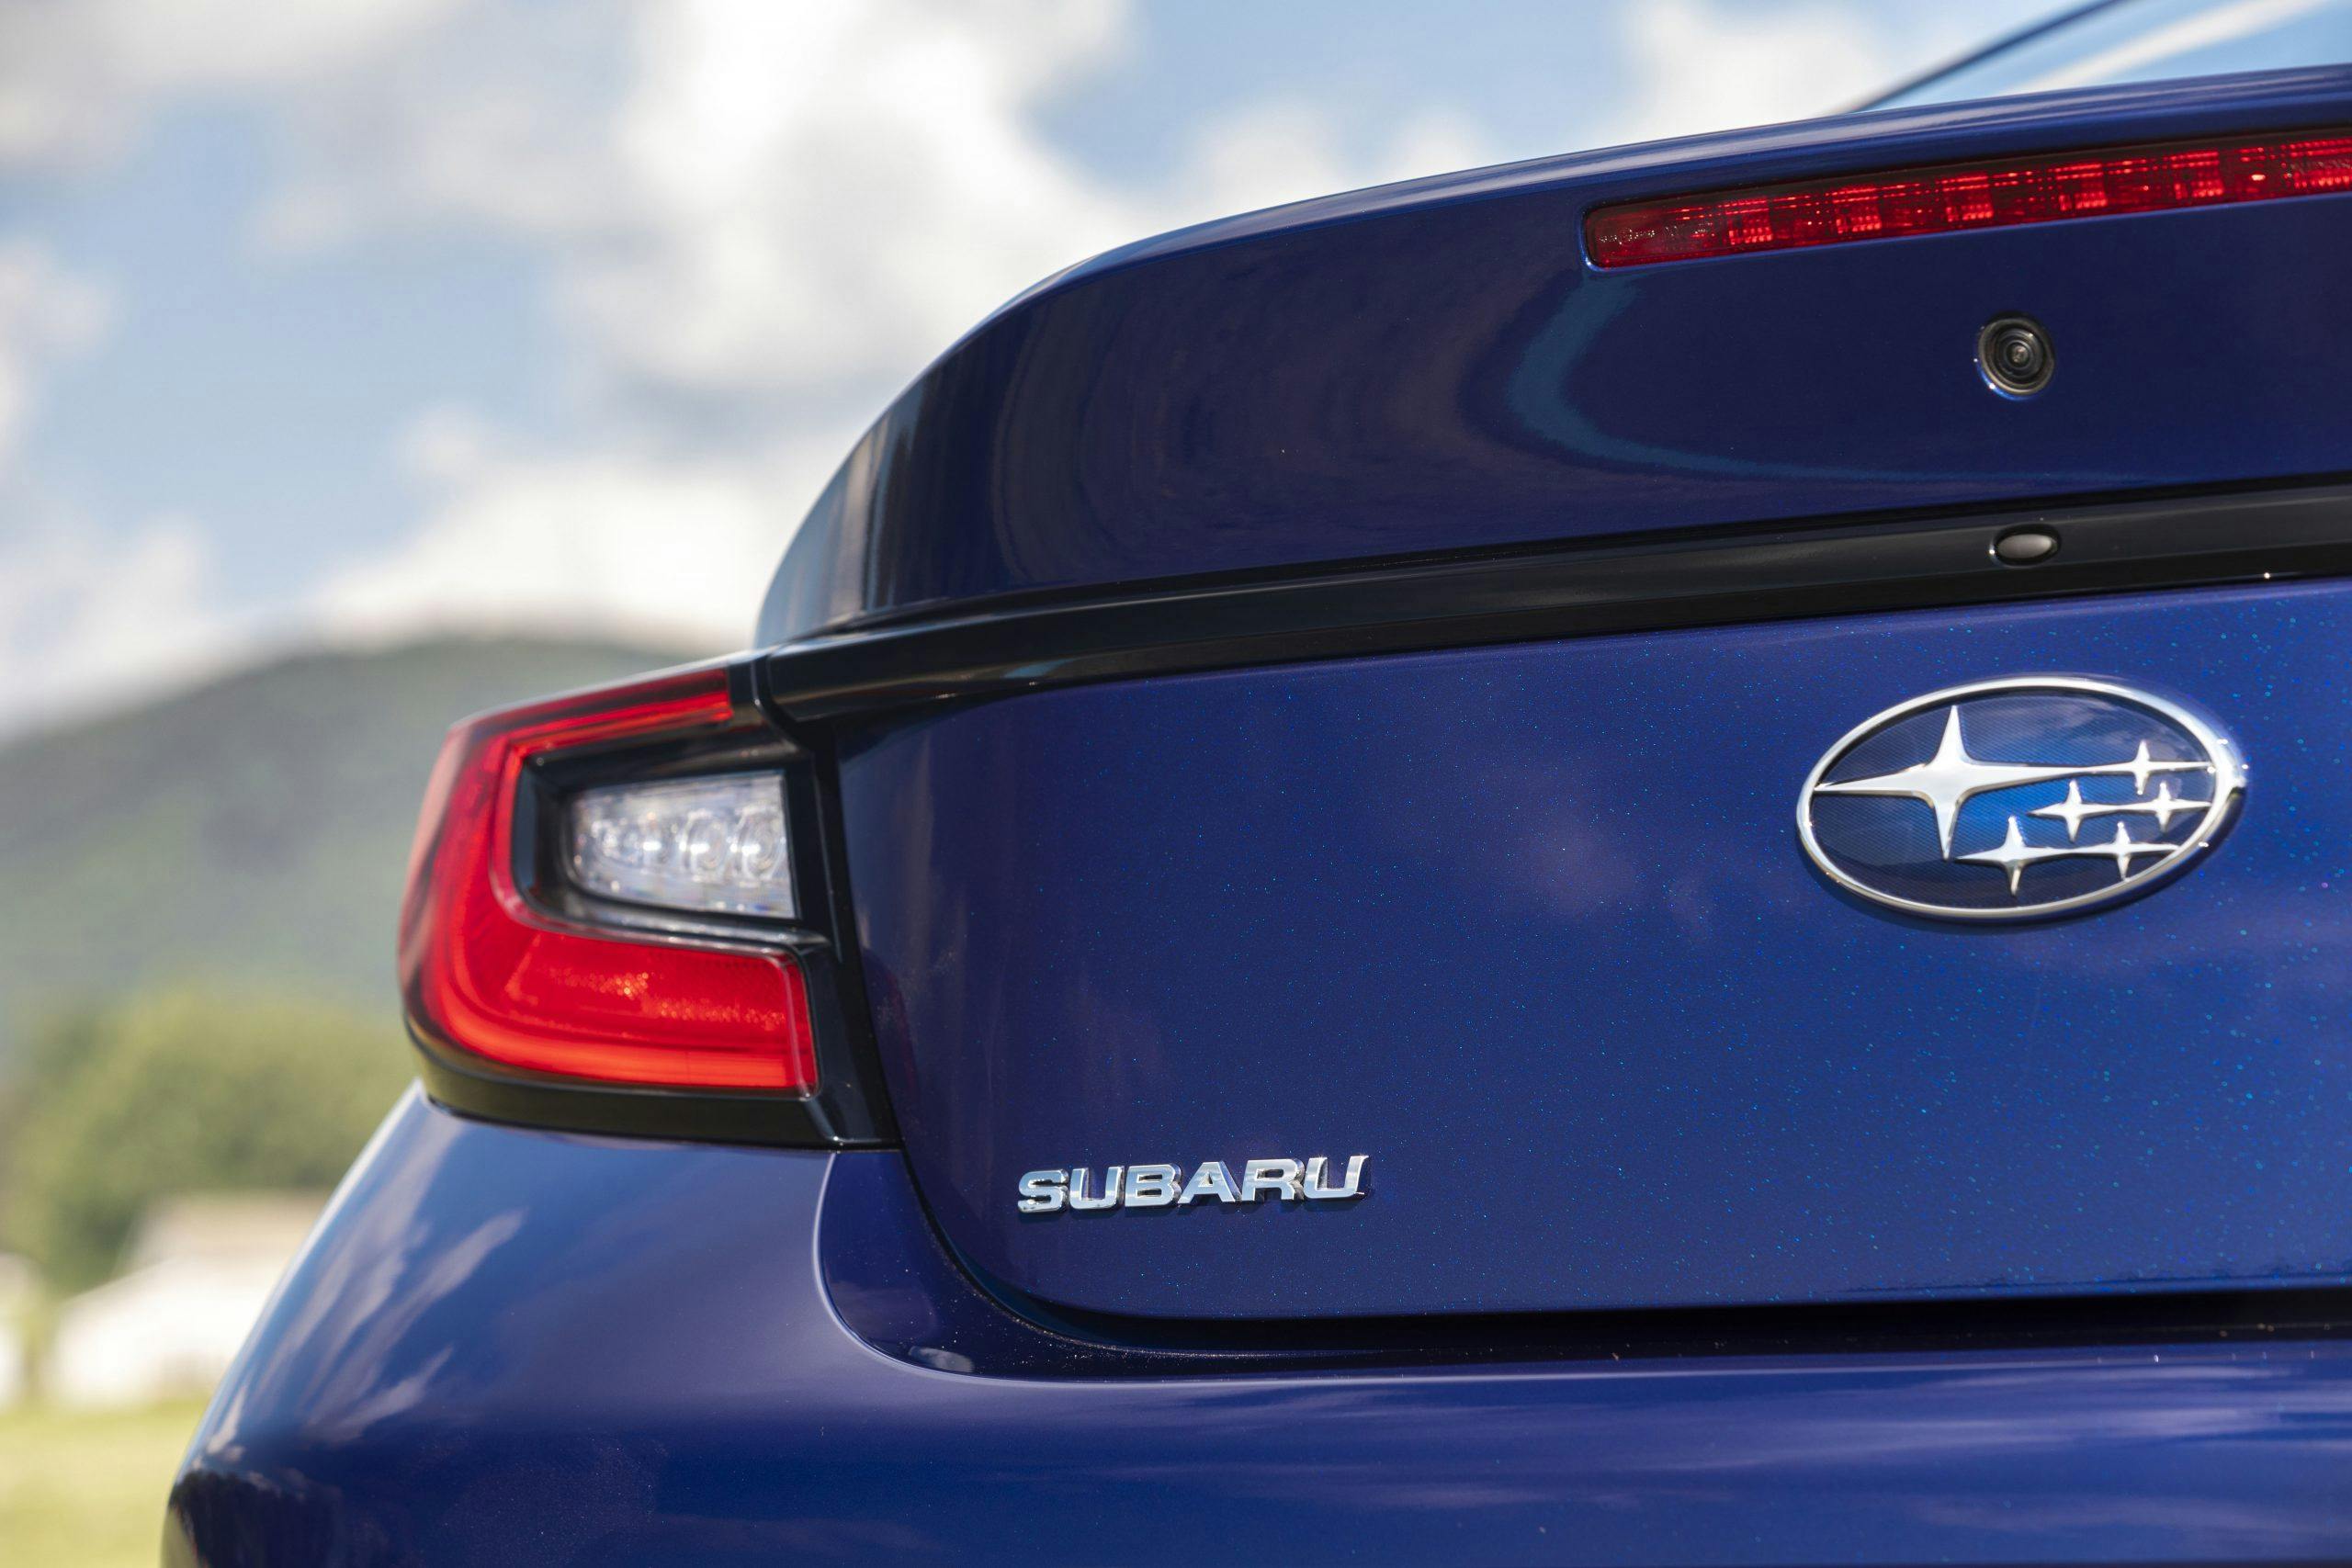 2022 Subaru BRZ rear detail close